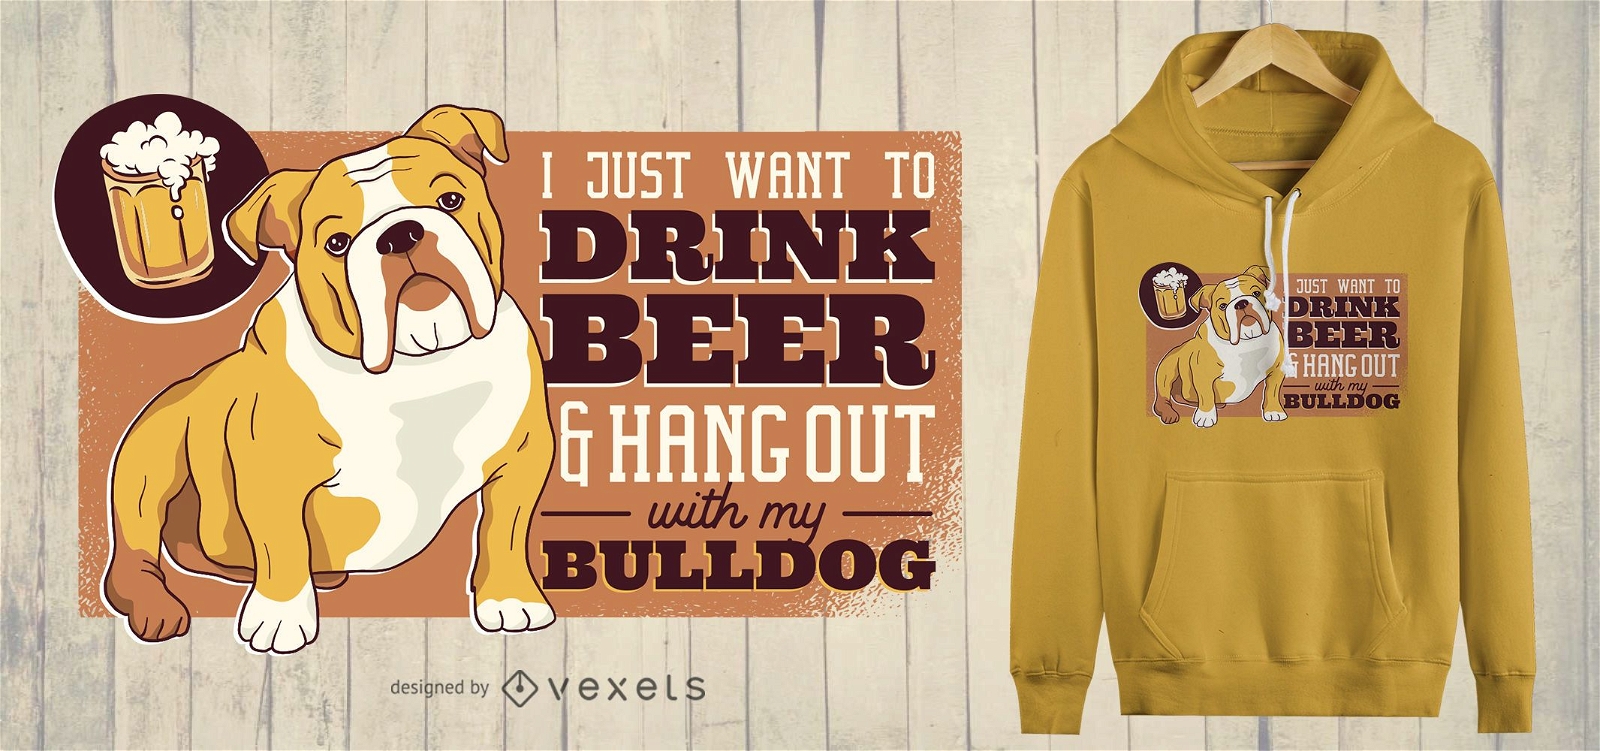 Beer & Bulldog T-Shirt Design